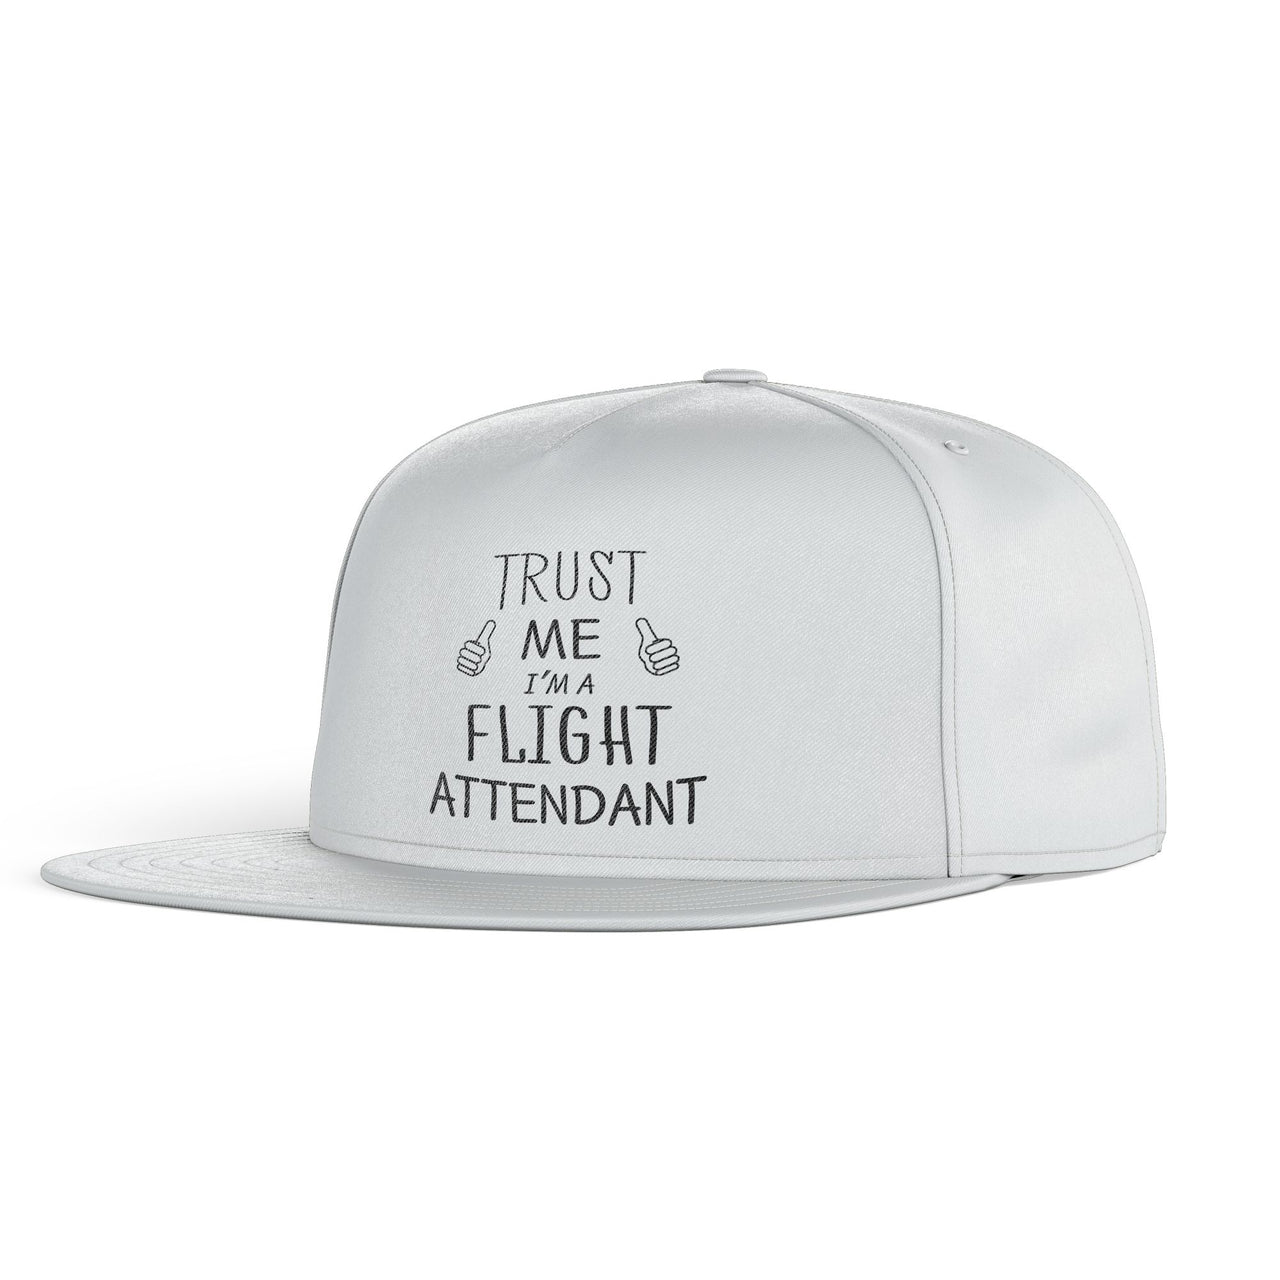 Trust Me I'm a Flight Attendant Designed Snapback Caps & Hats